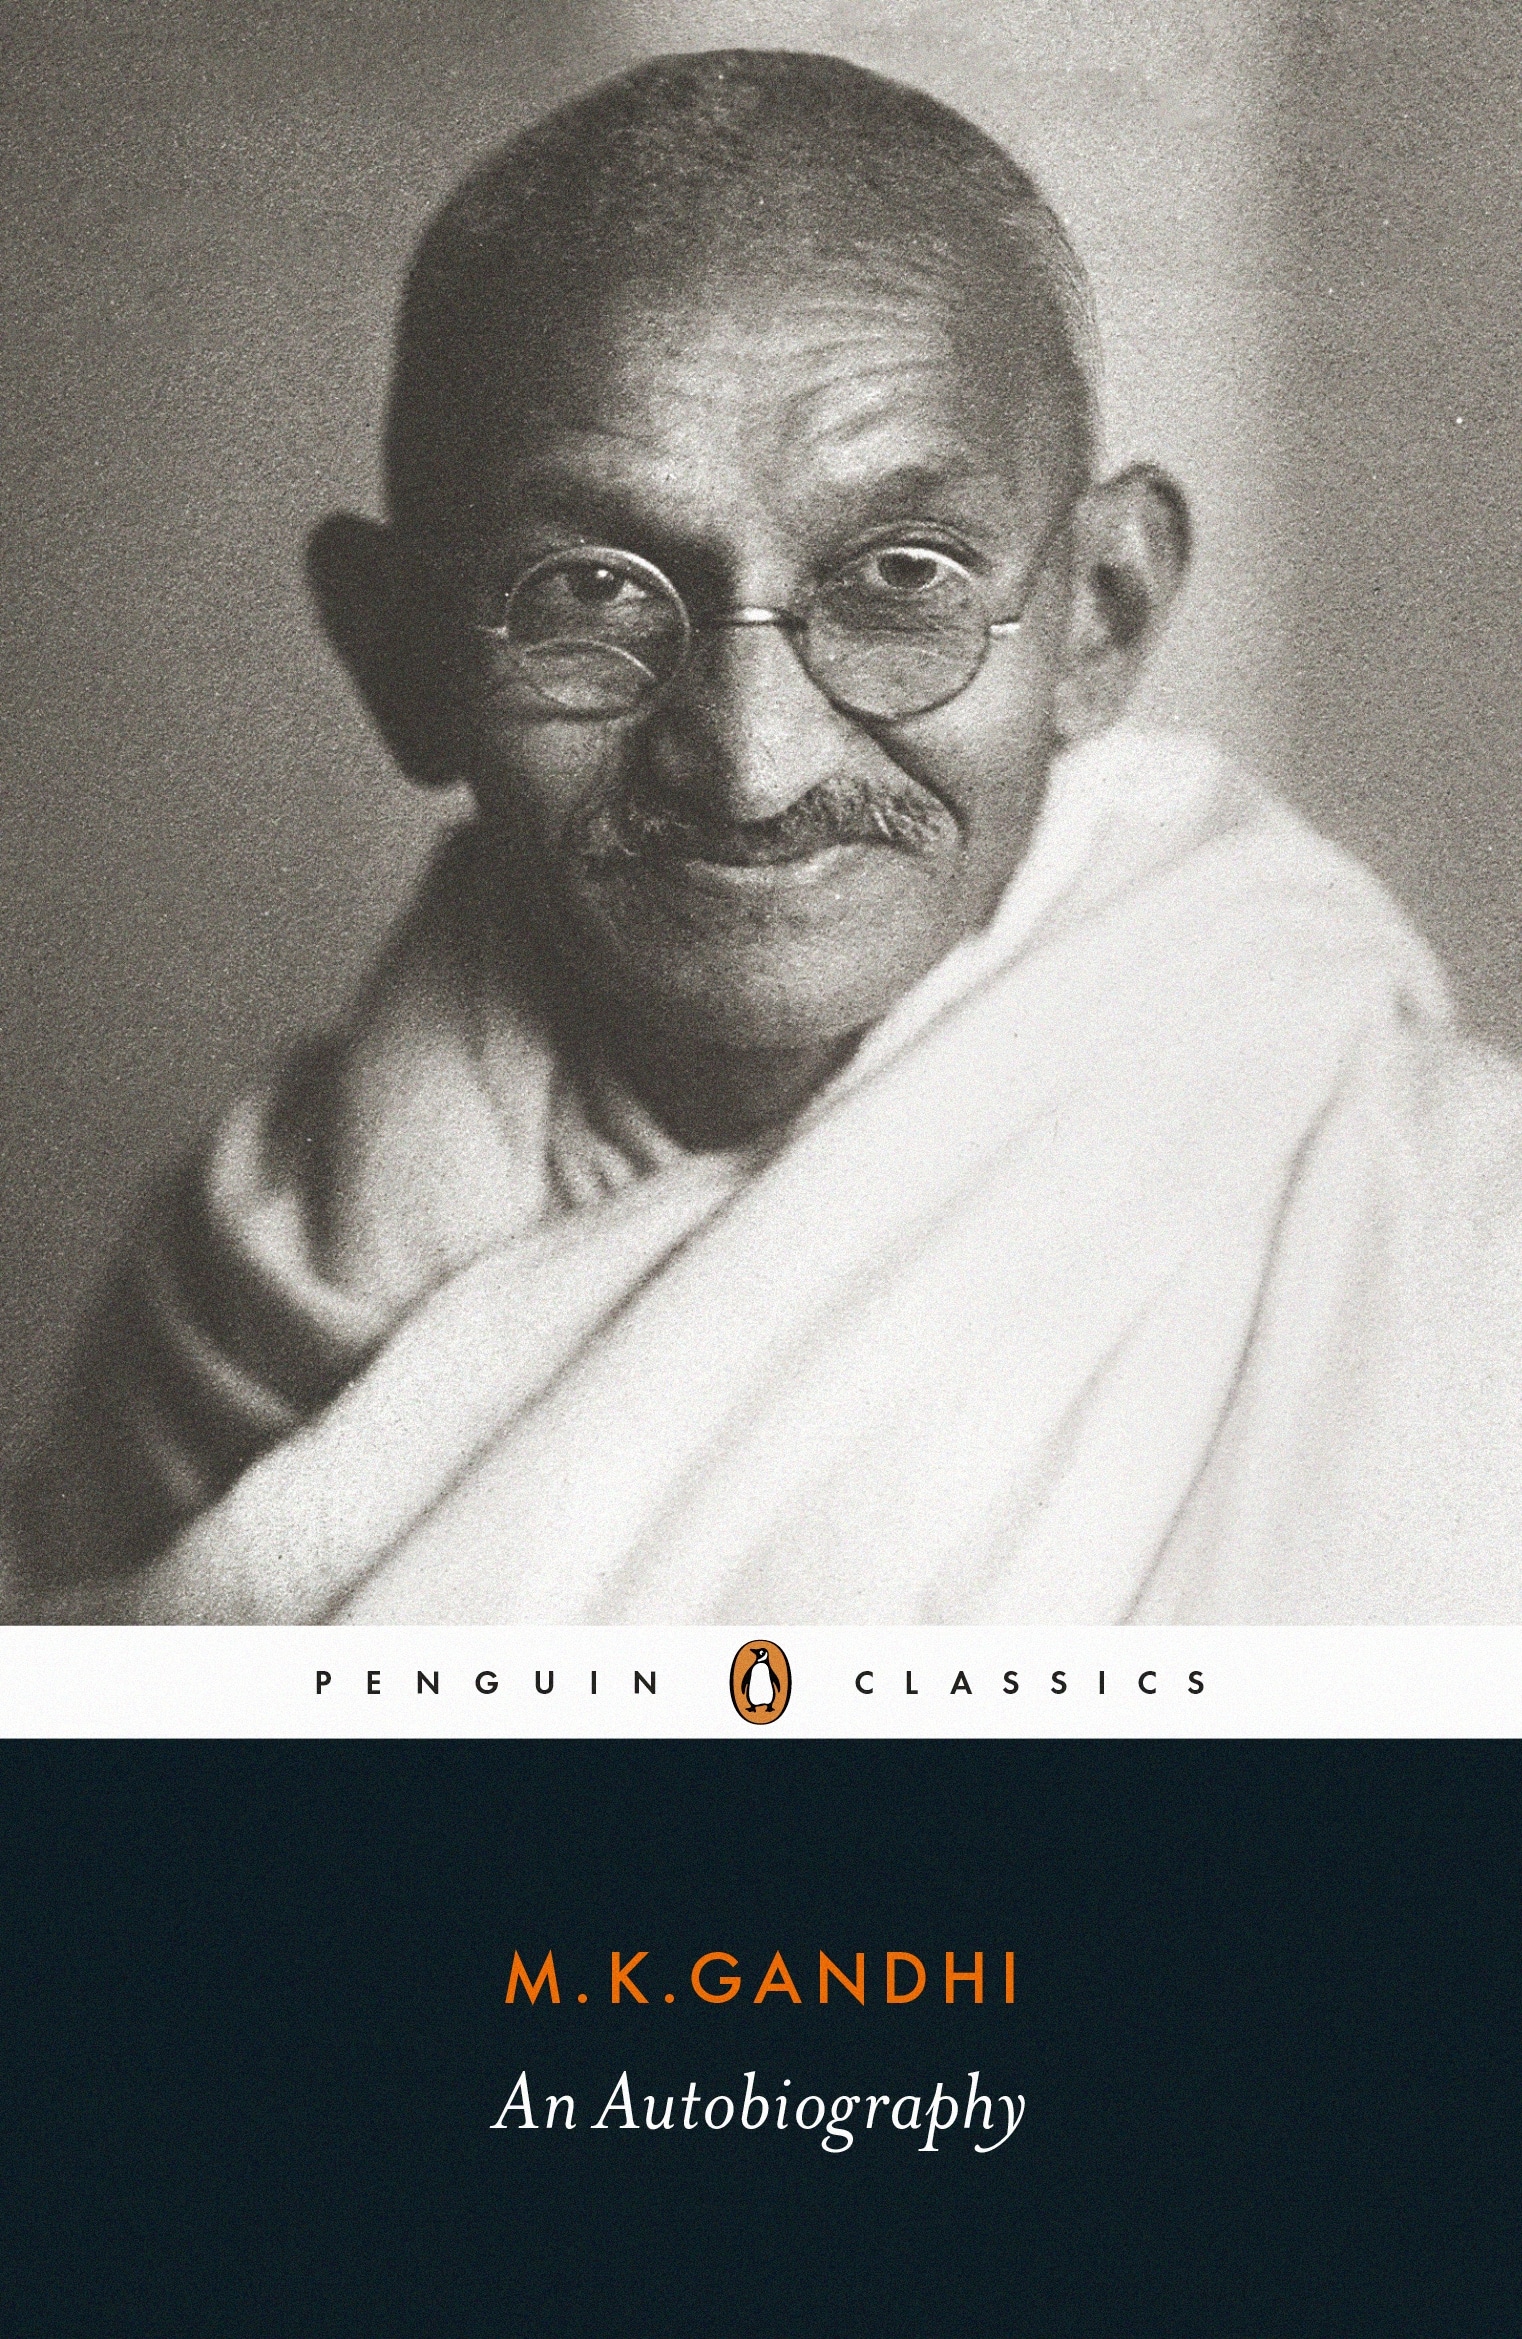 Book “An Autobiography” by M. K. Gandhi, Sunil Khilnani — November 5, 2020